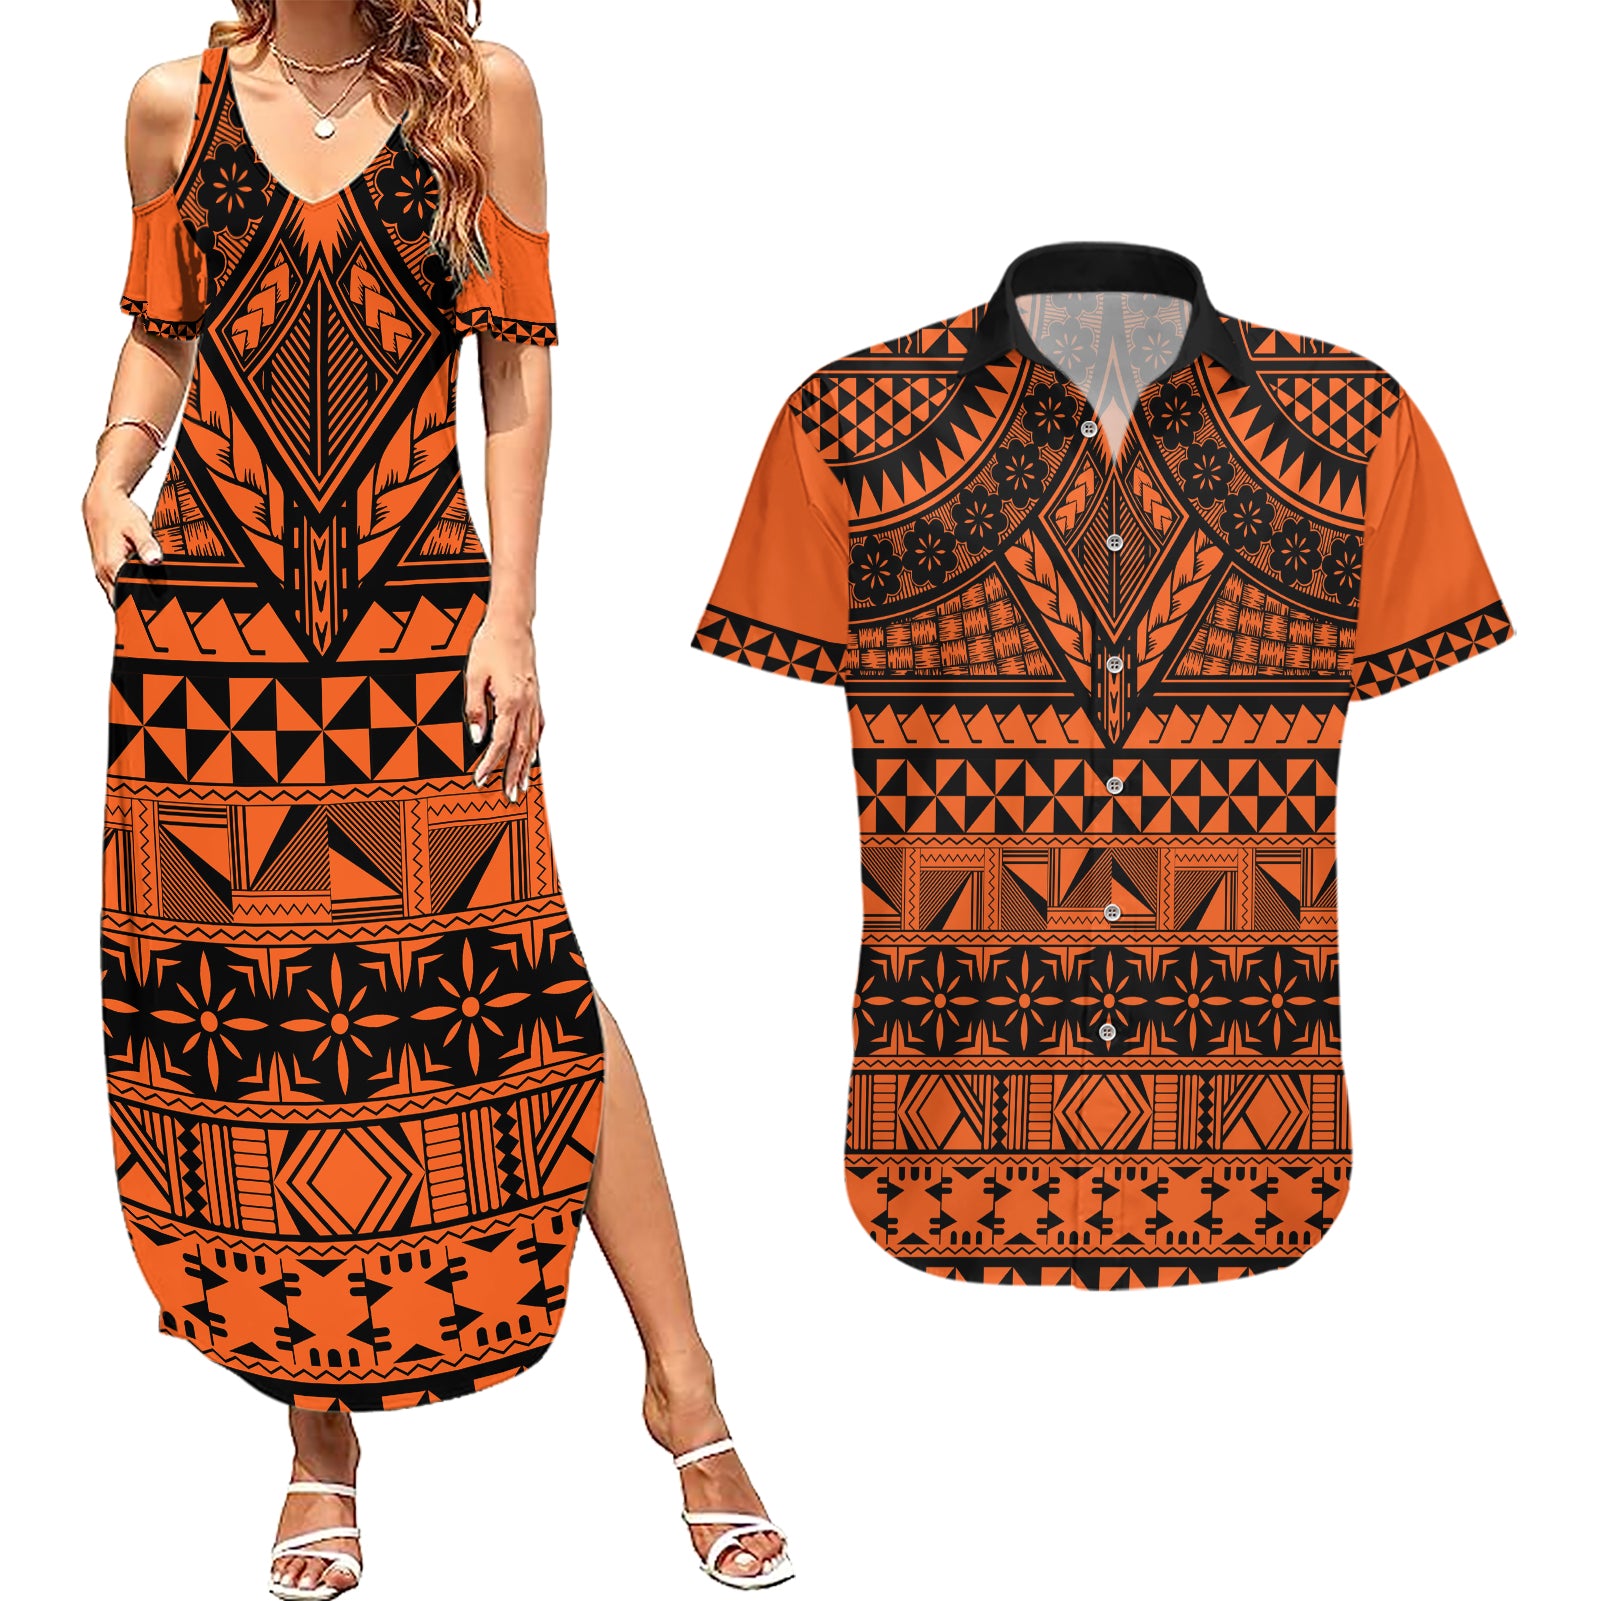 Halo Olaketa Solomon Islands Couples Matching Summer Maxi Dress and Hawaiian Shirt Melanesian Tribal Pattern Orange Version LT14 Orange - Polynesian Pride